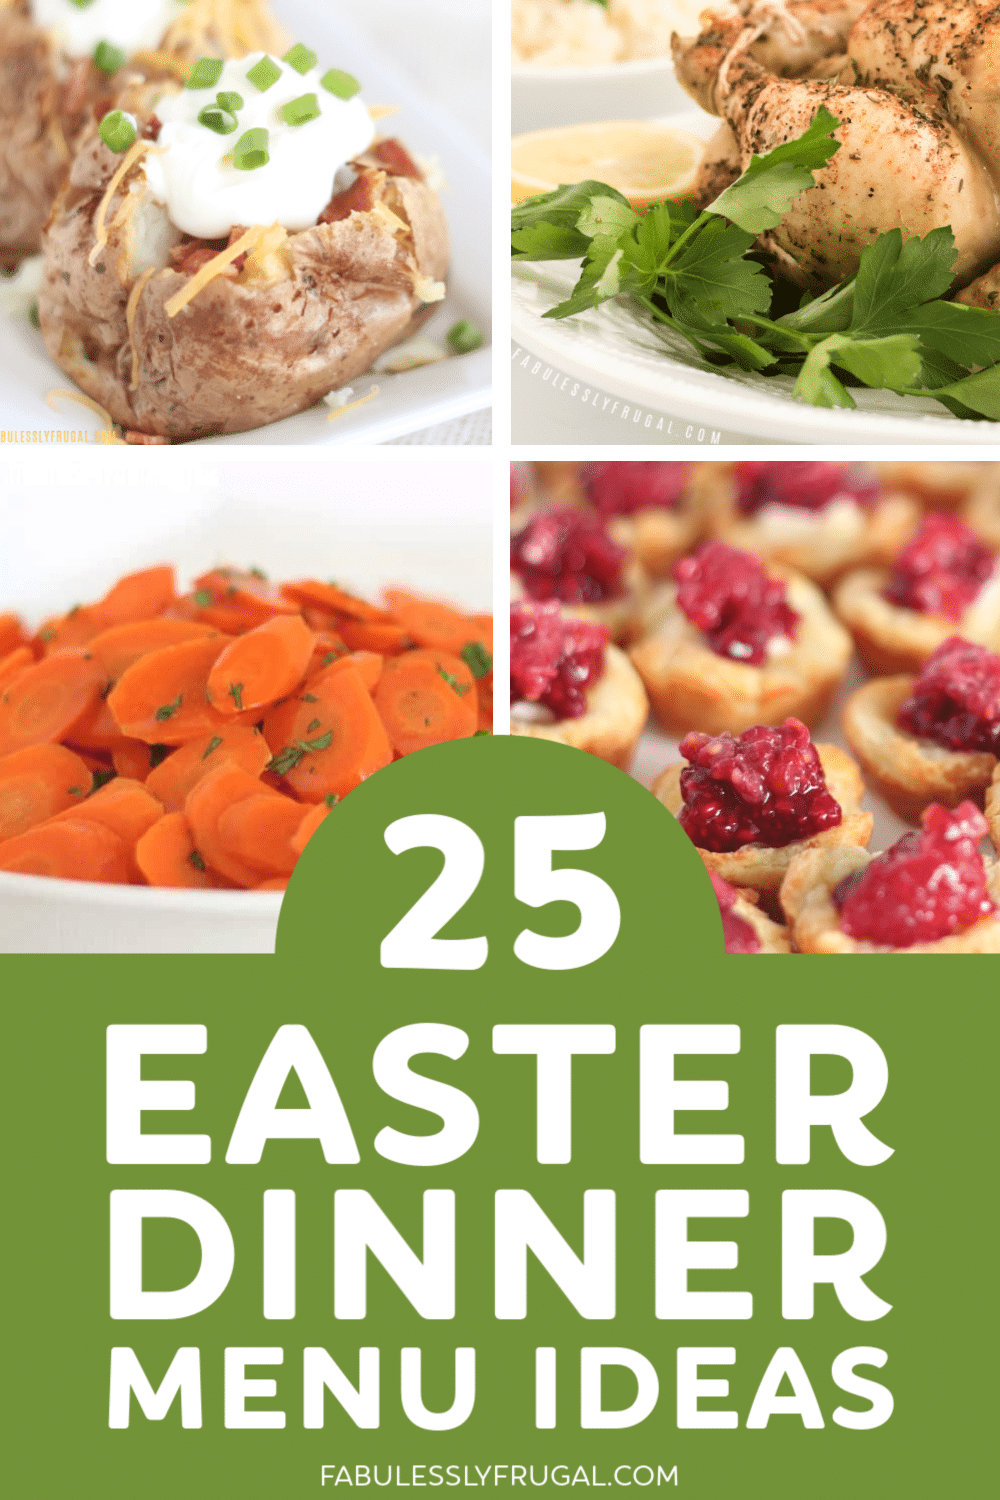 Easter dinner menu ideas